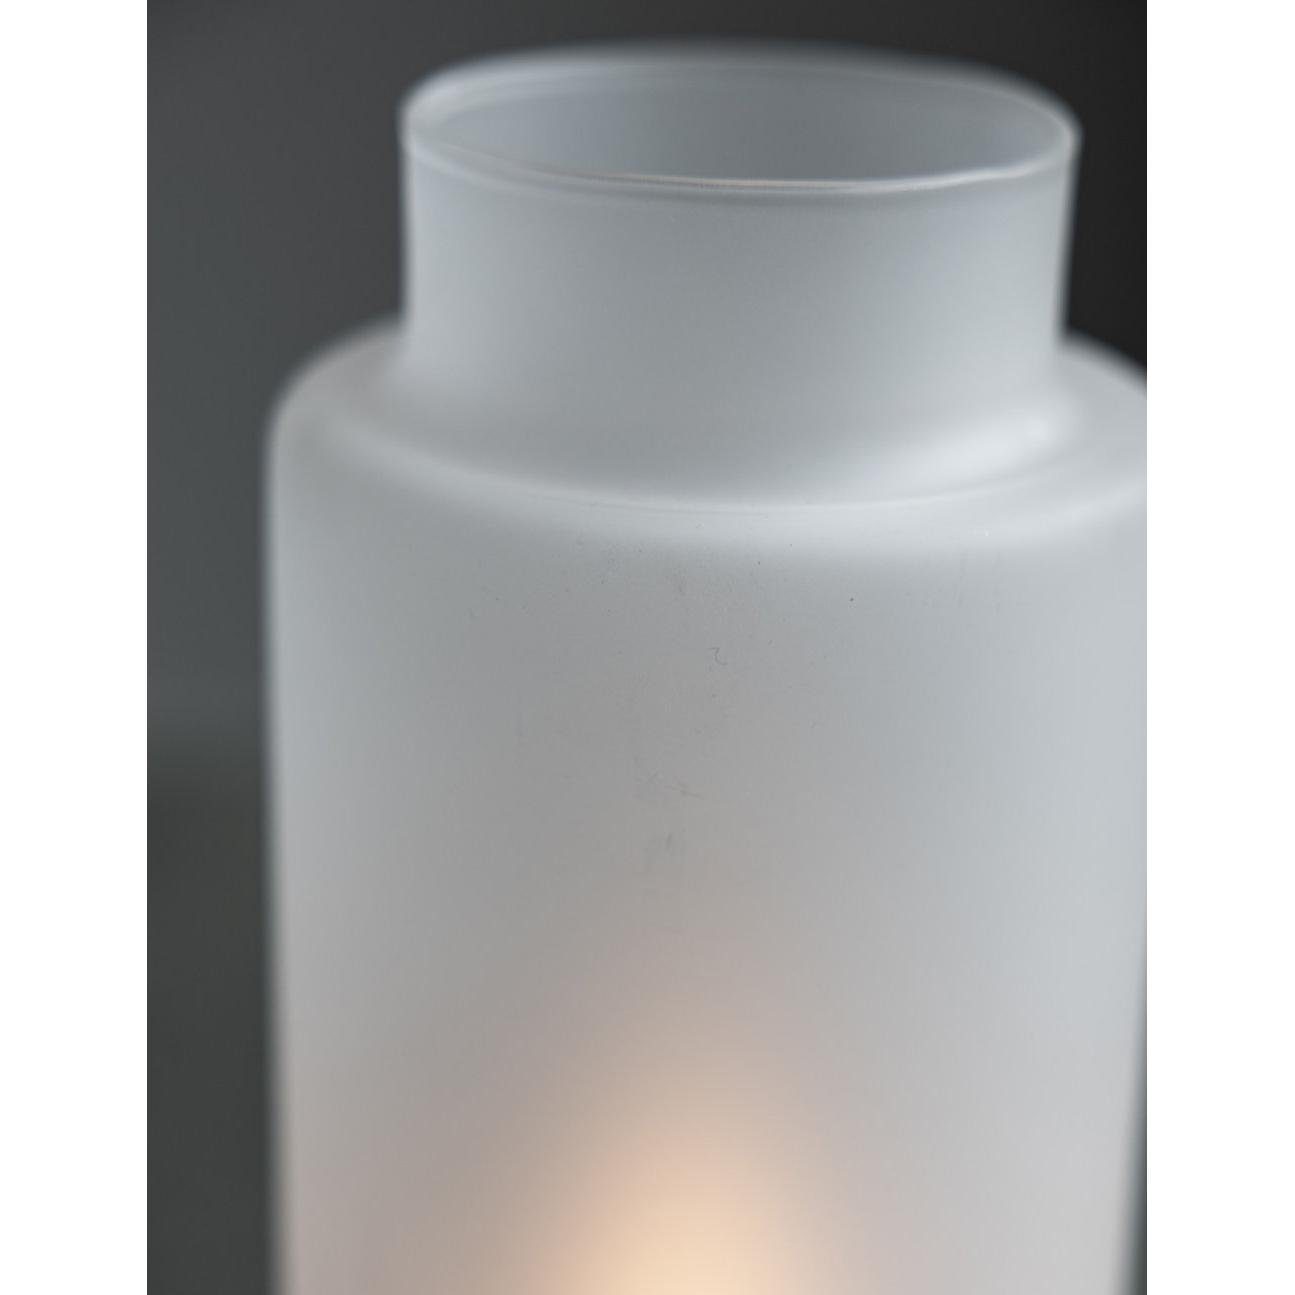 Storm Kerzenleuchter Kerzenhalter Transparent Matt Storefactory Für (30cm) Glaszylinder